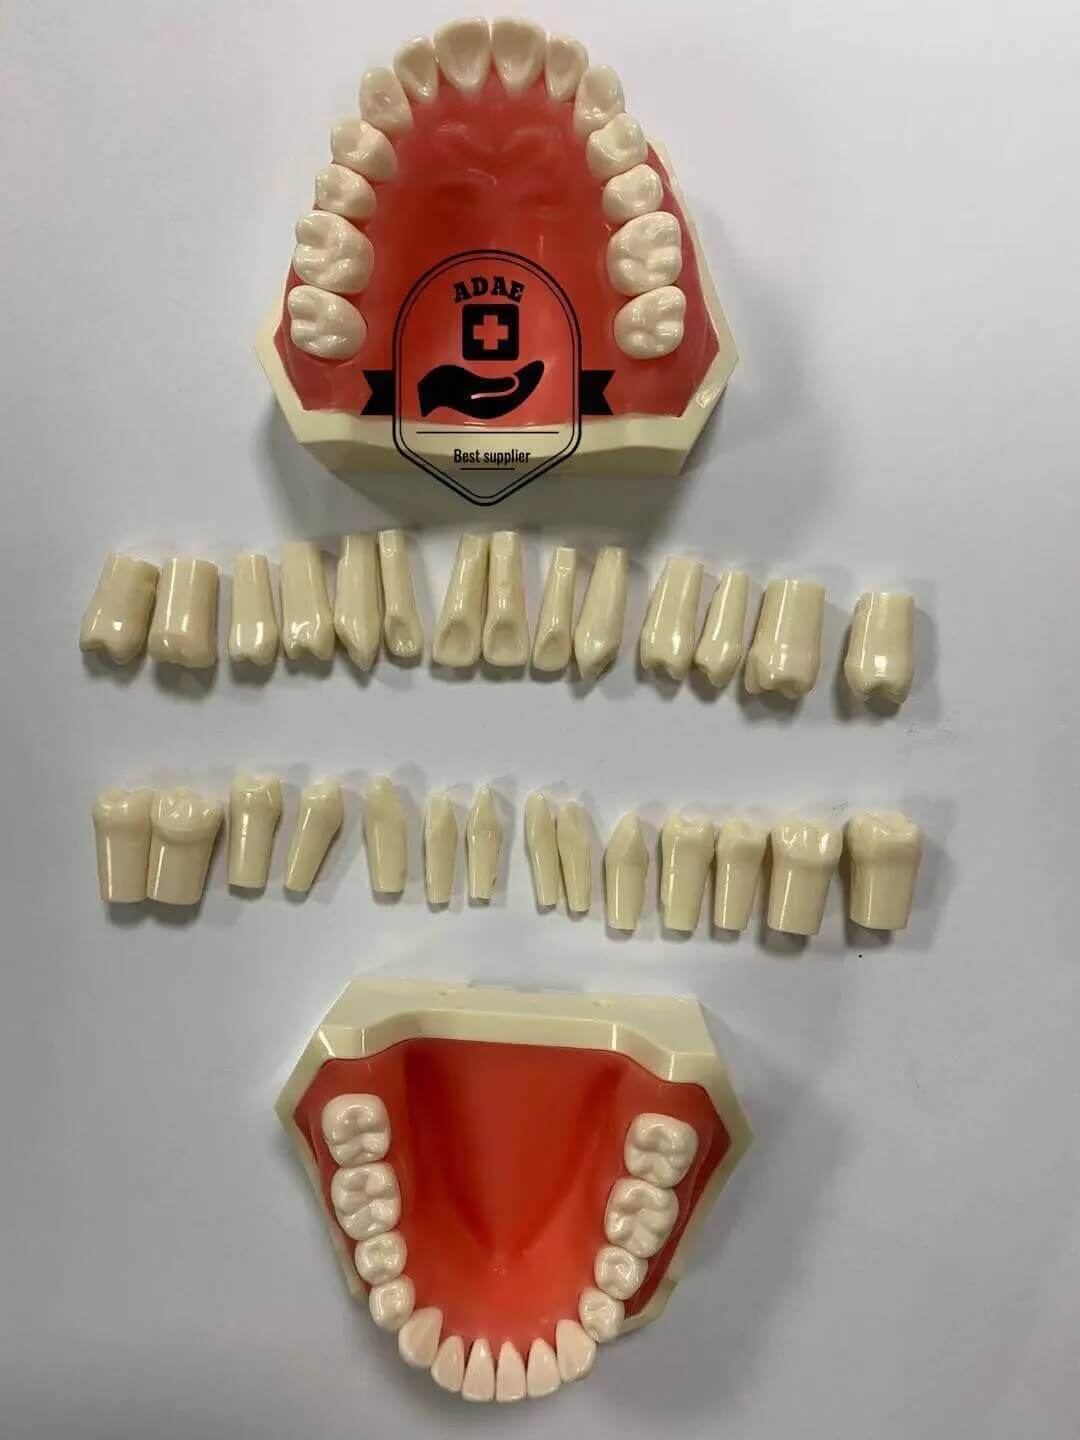 ADAE T1 dental phantom head with magnetic jaws